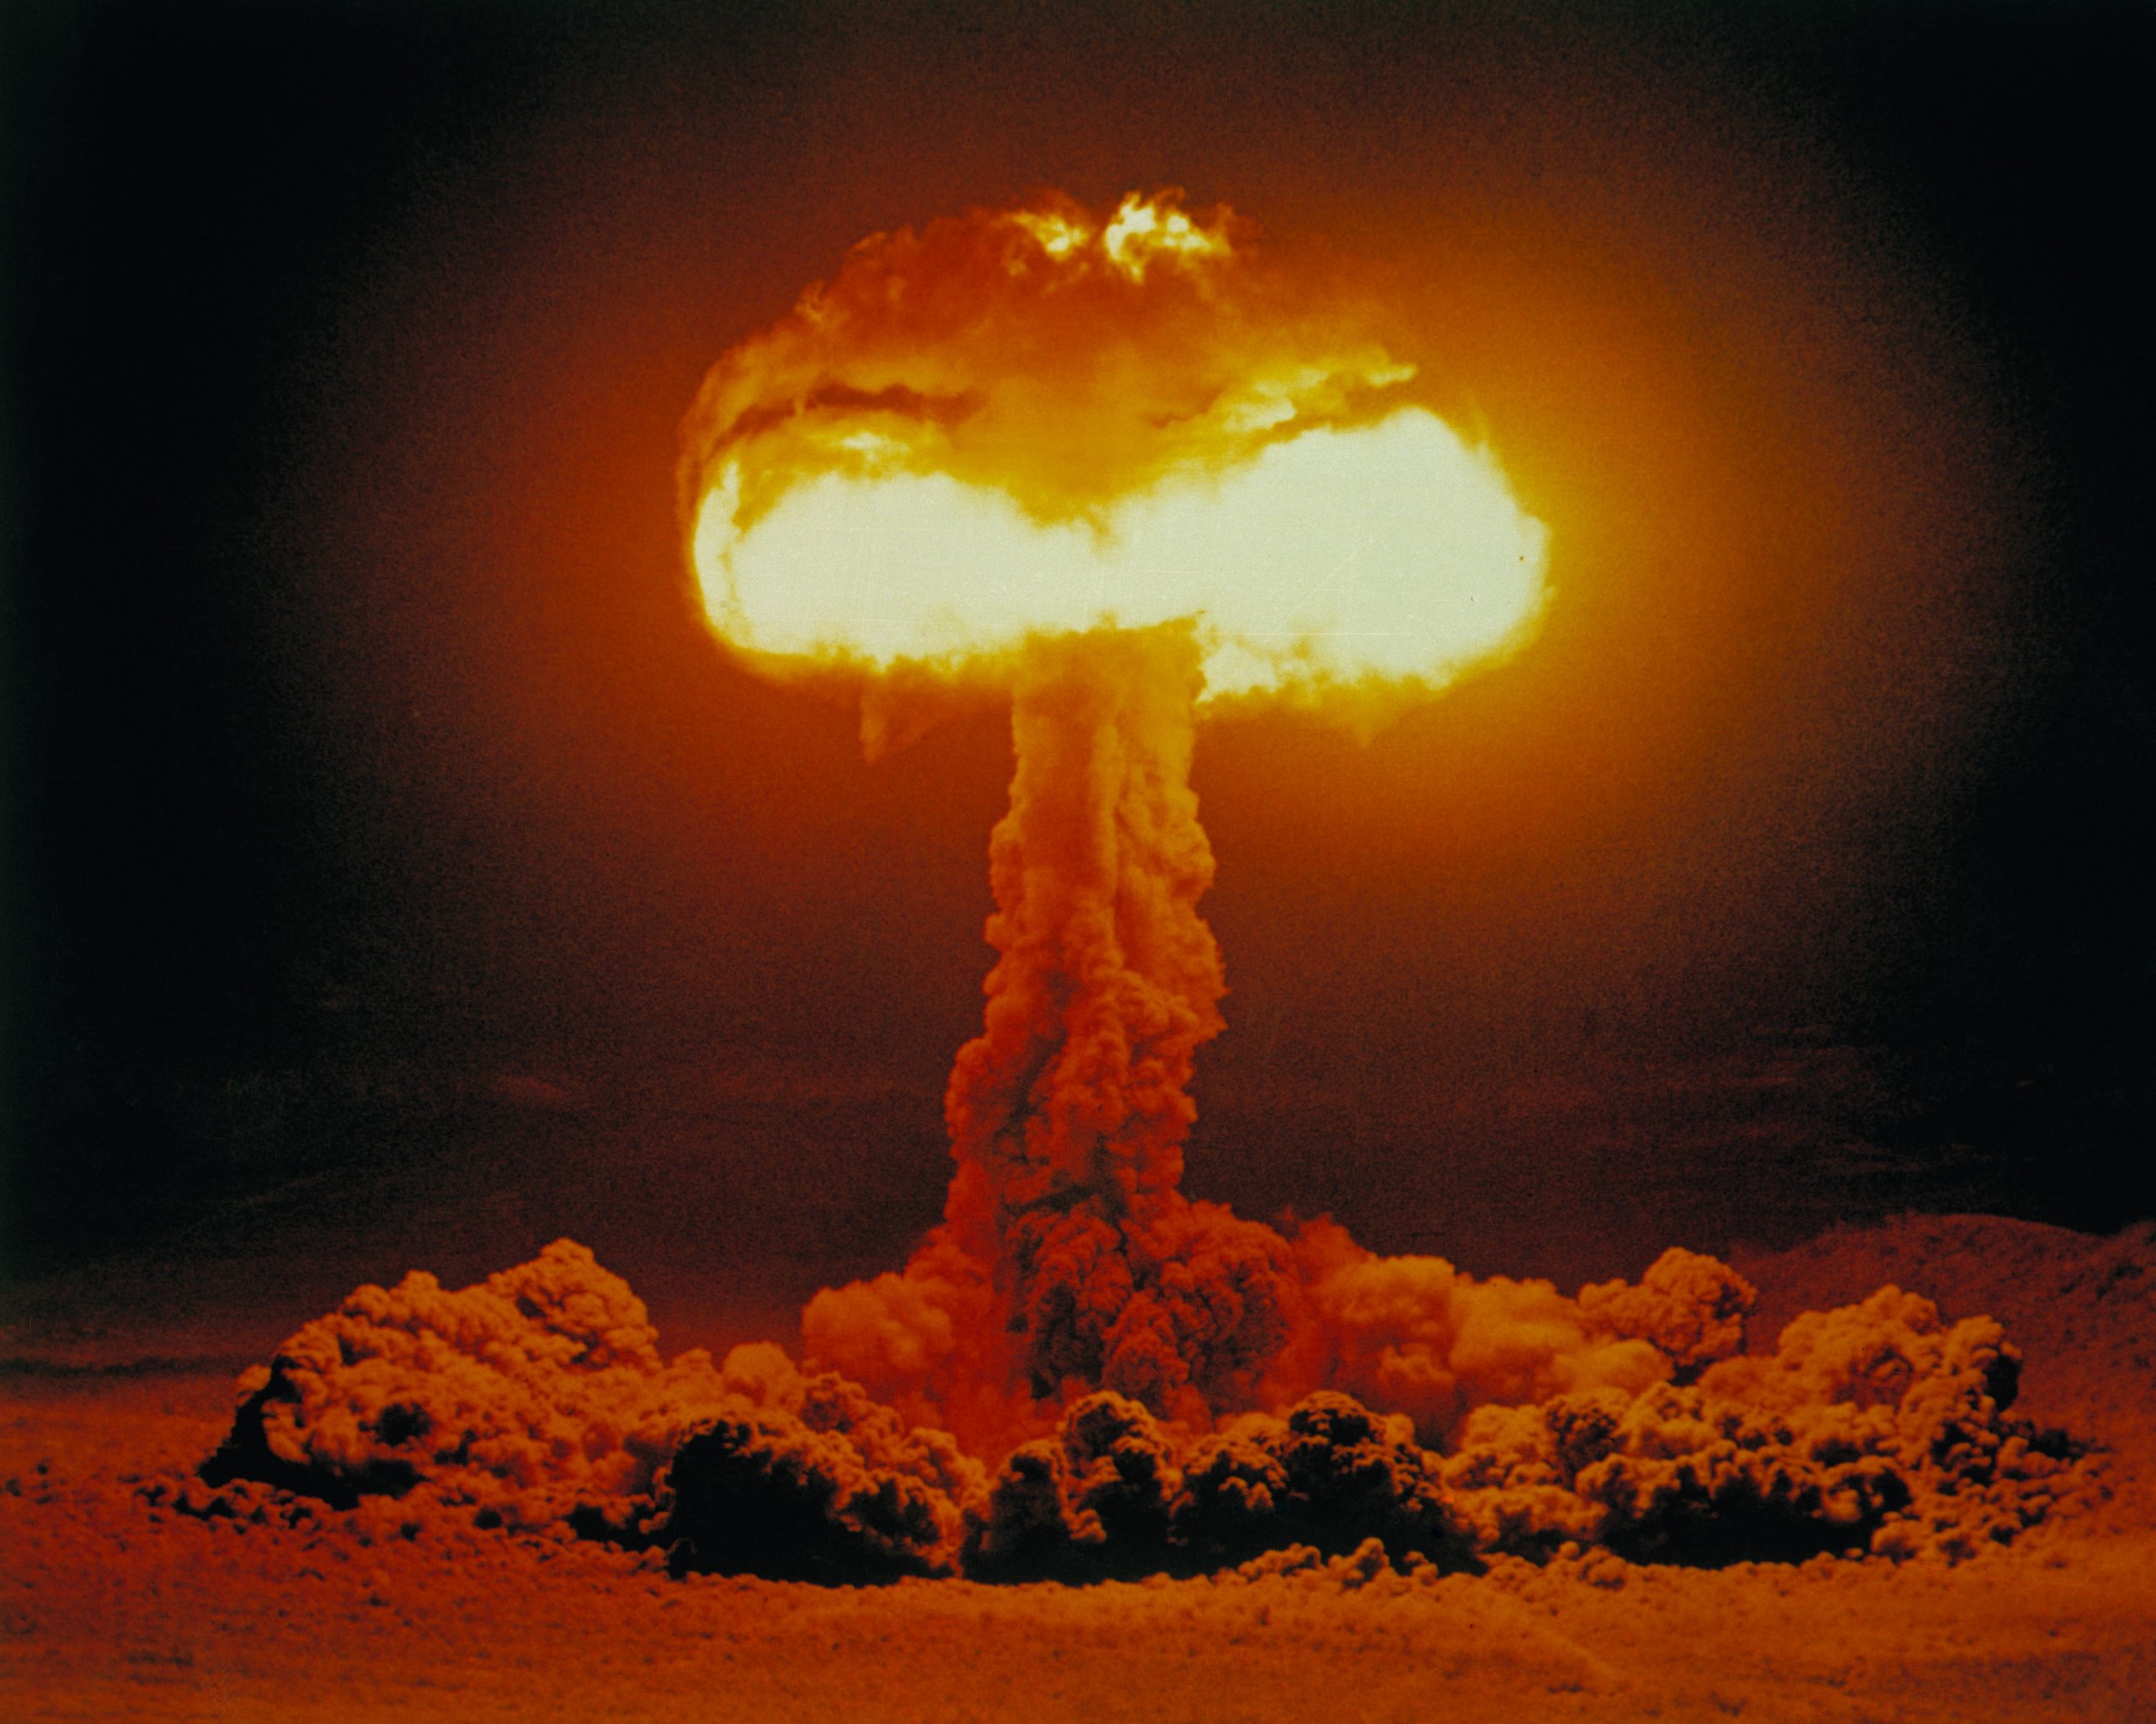 Plumbbob-Hood nuclear test, July 1957